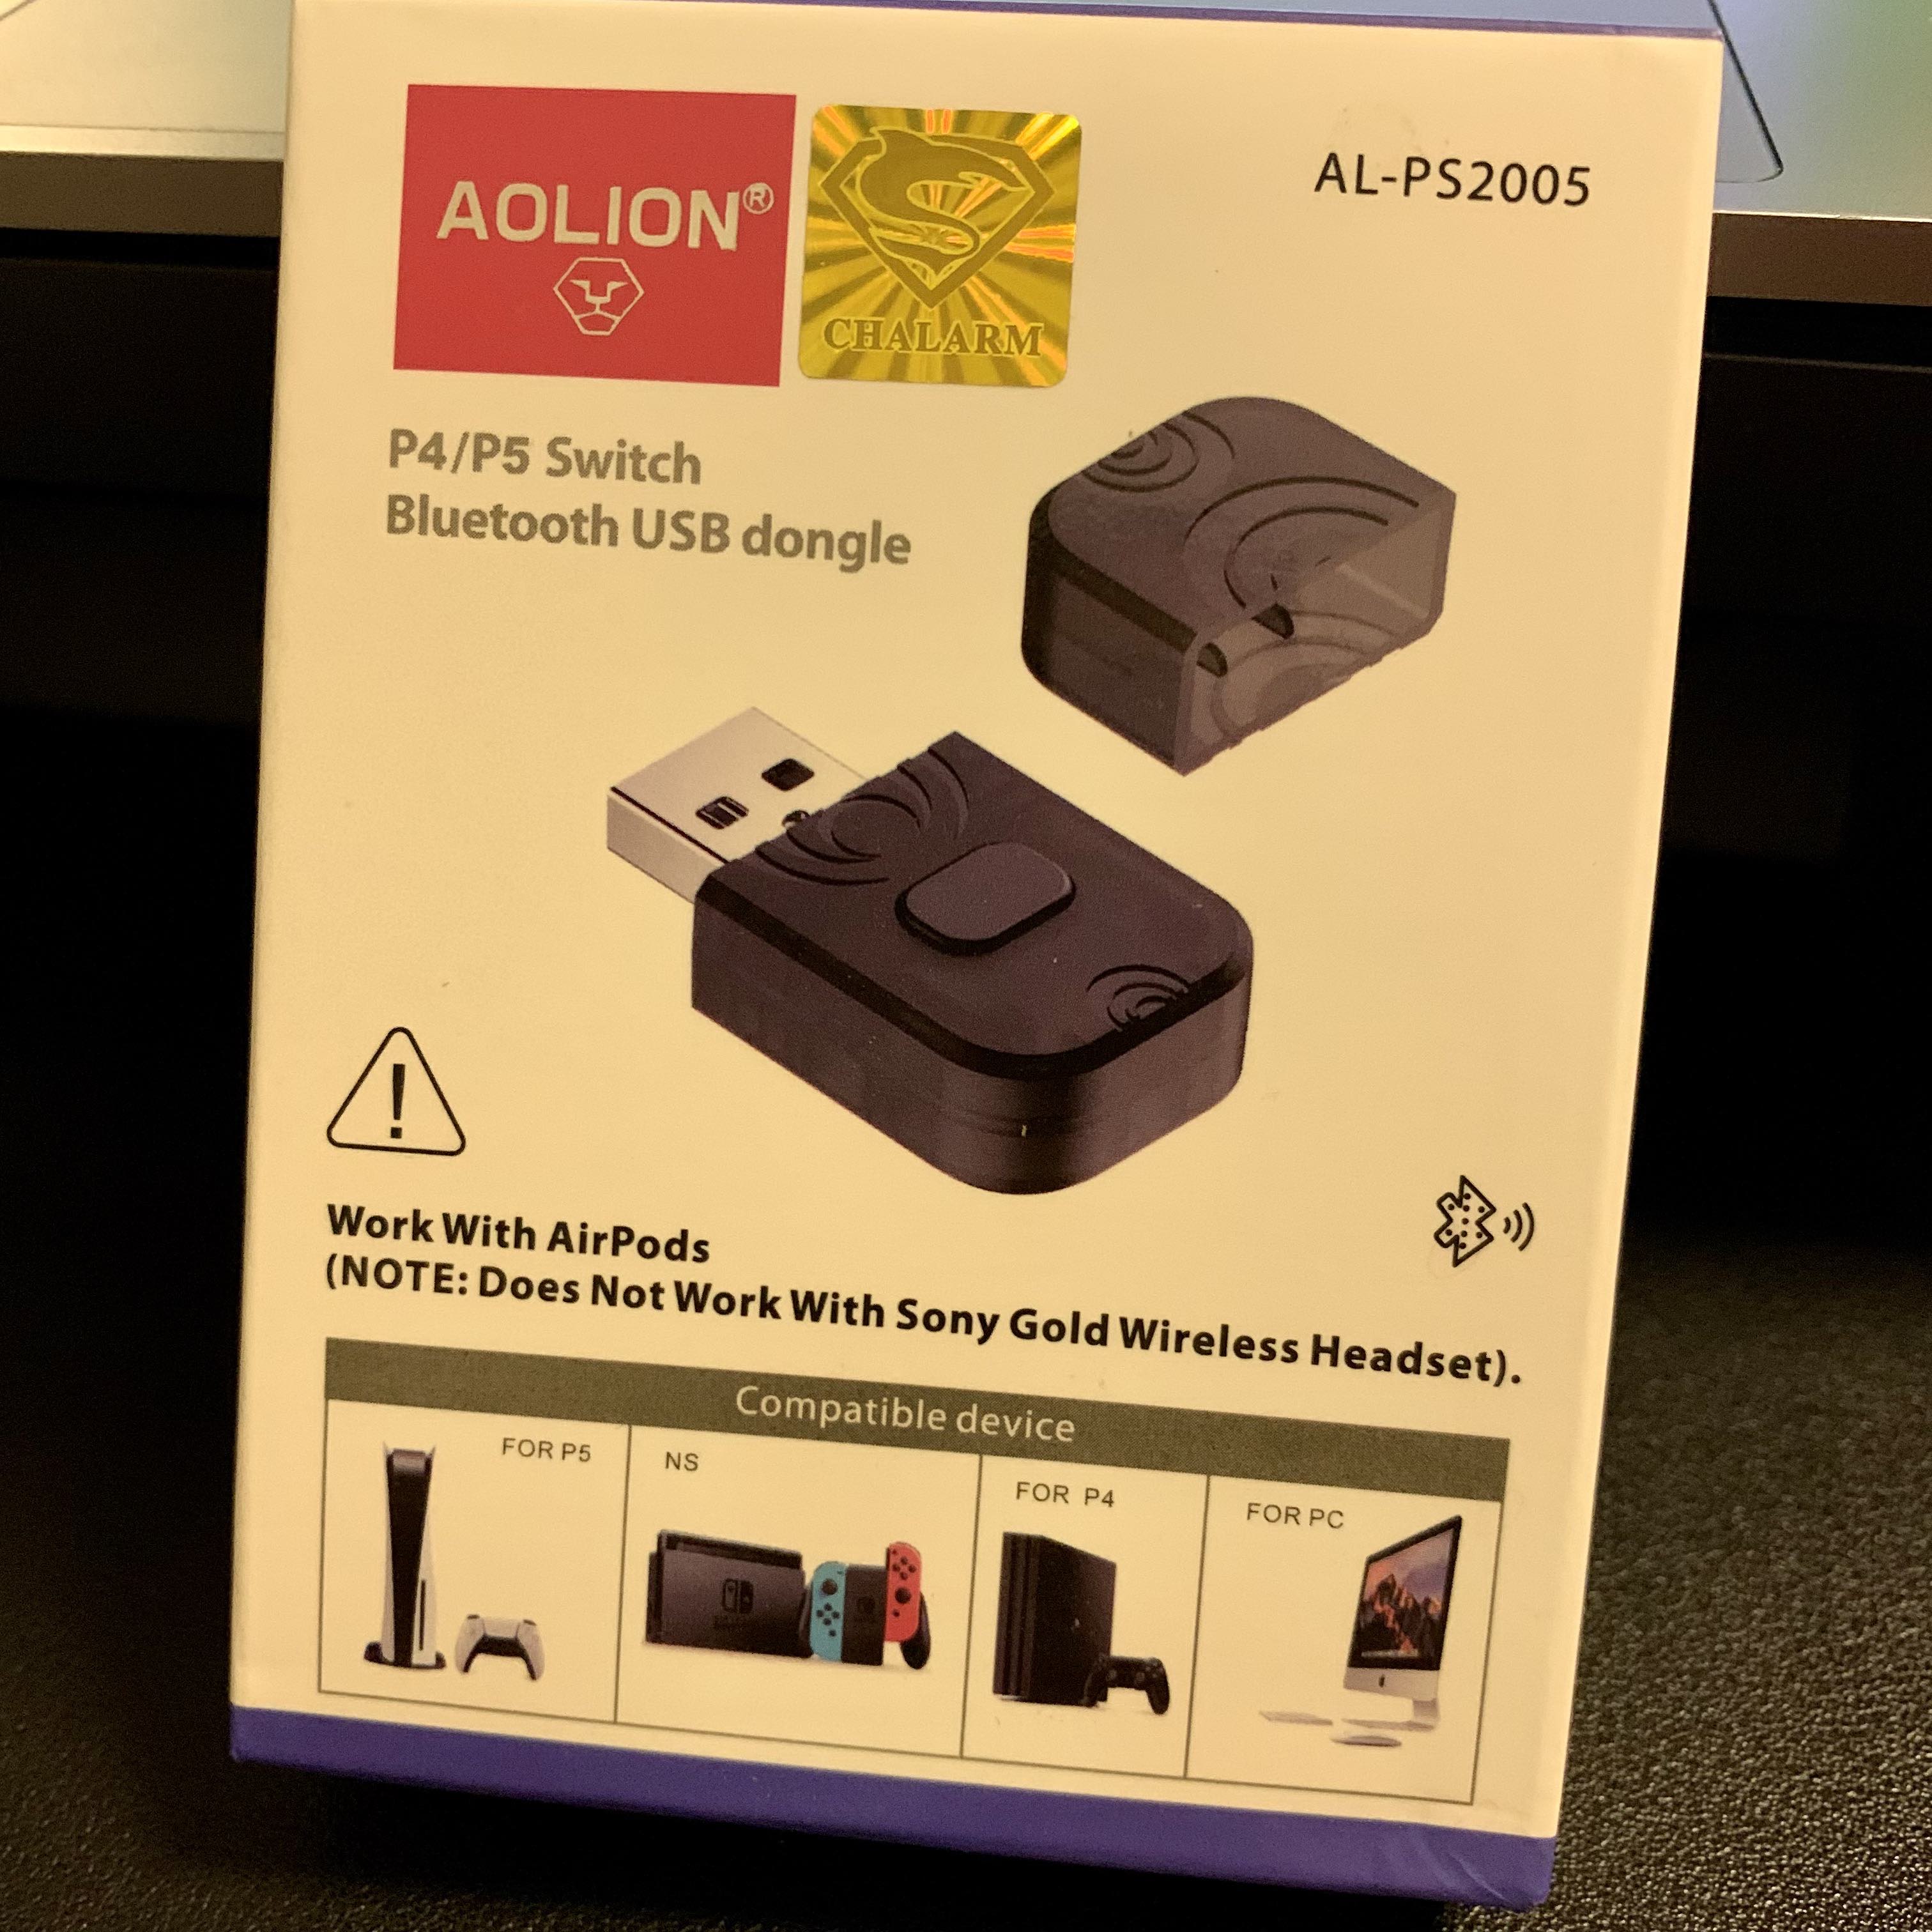 Aolion P4/P5 Switch Bluetooth USB Dongle